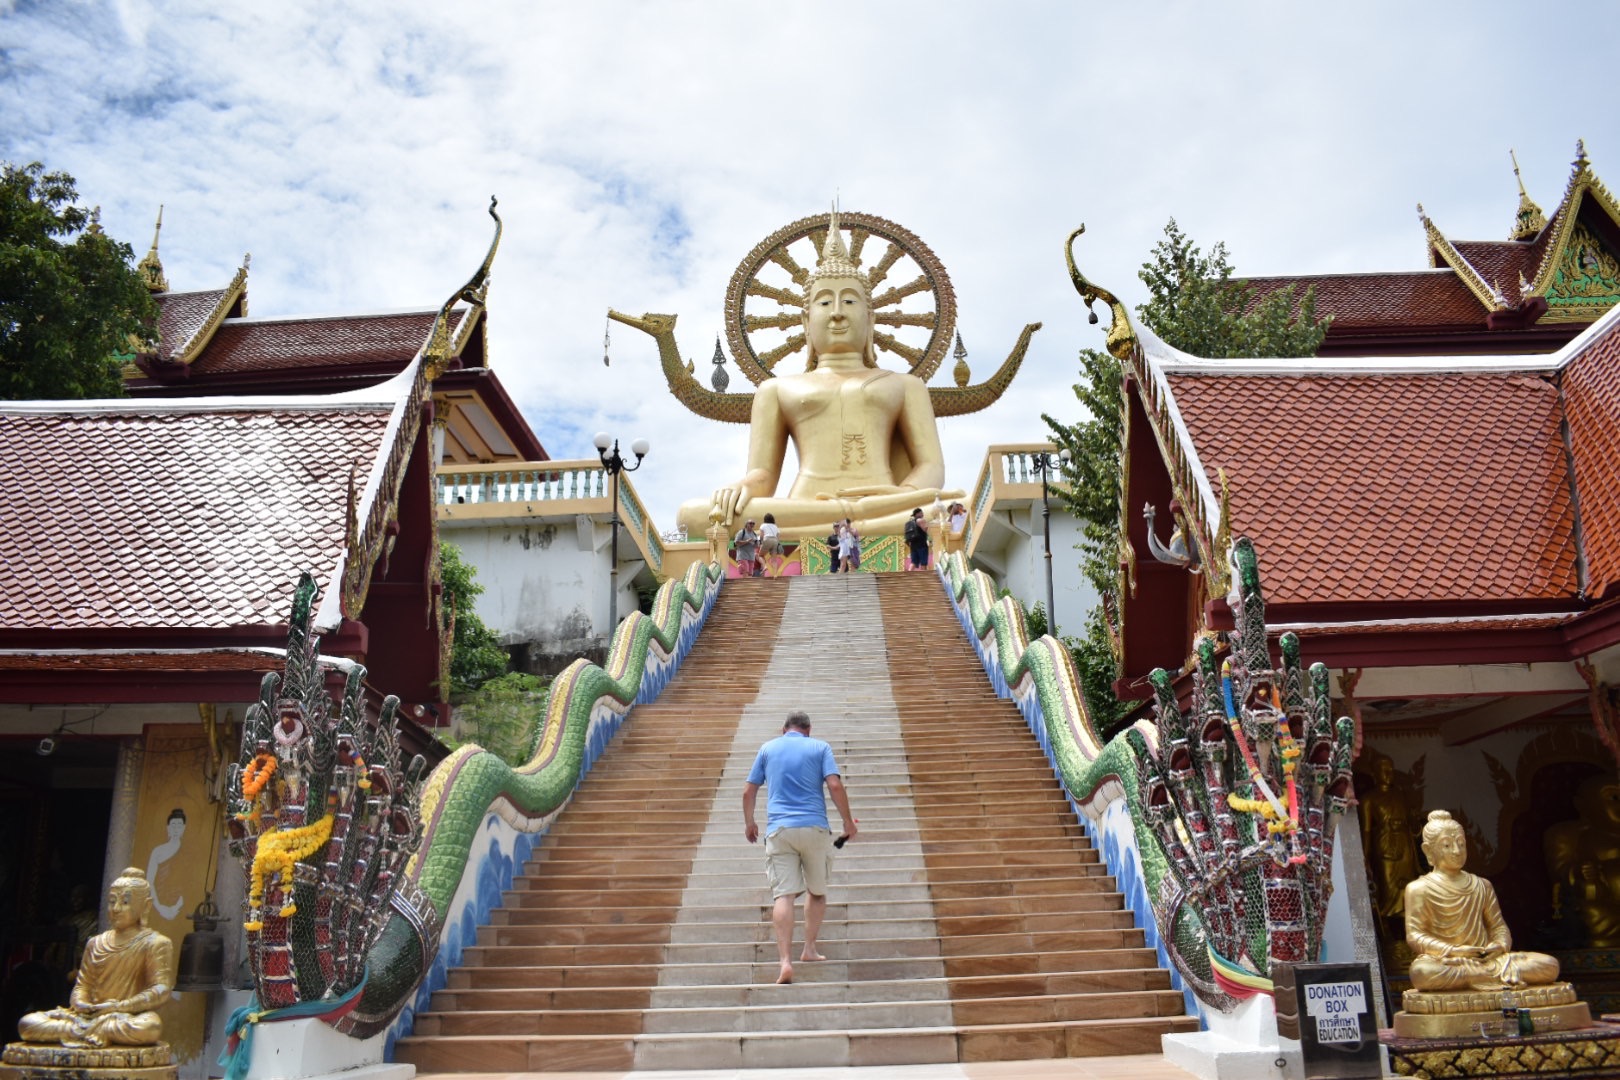 The stairway to the Big Buddha at Tongsai Bay, Koh Samui. 